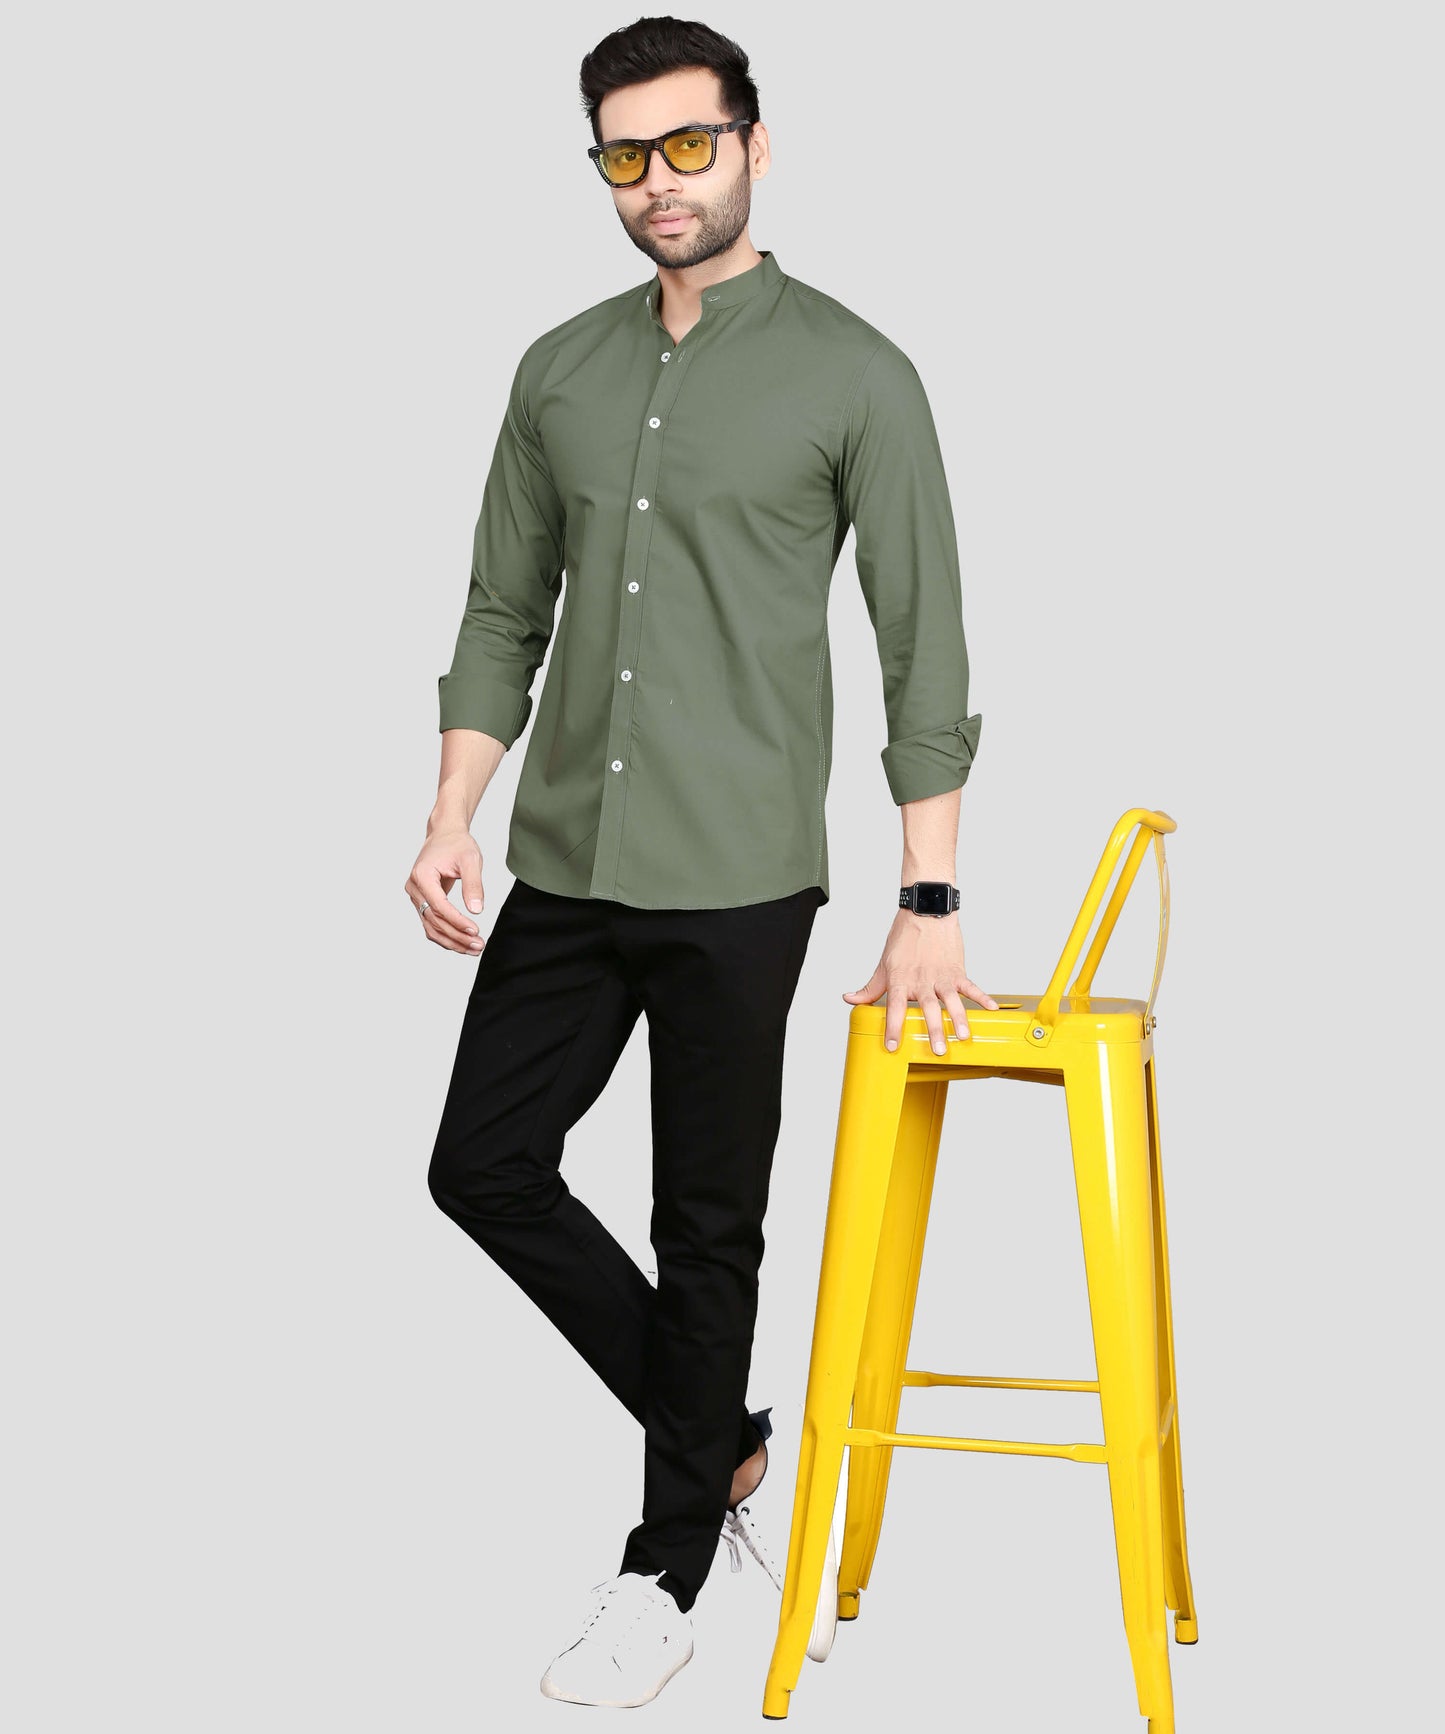 5thanfold Men's Casual Rusty Green Full Sleeve Pure Cotton Mandarin Collar Shirt (No Pocket)